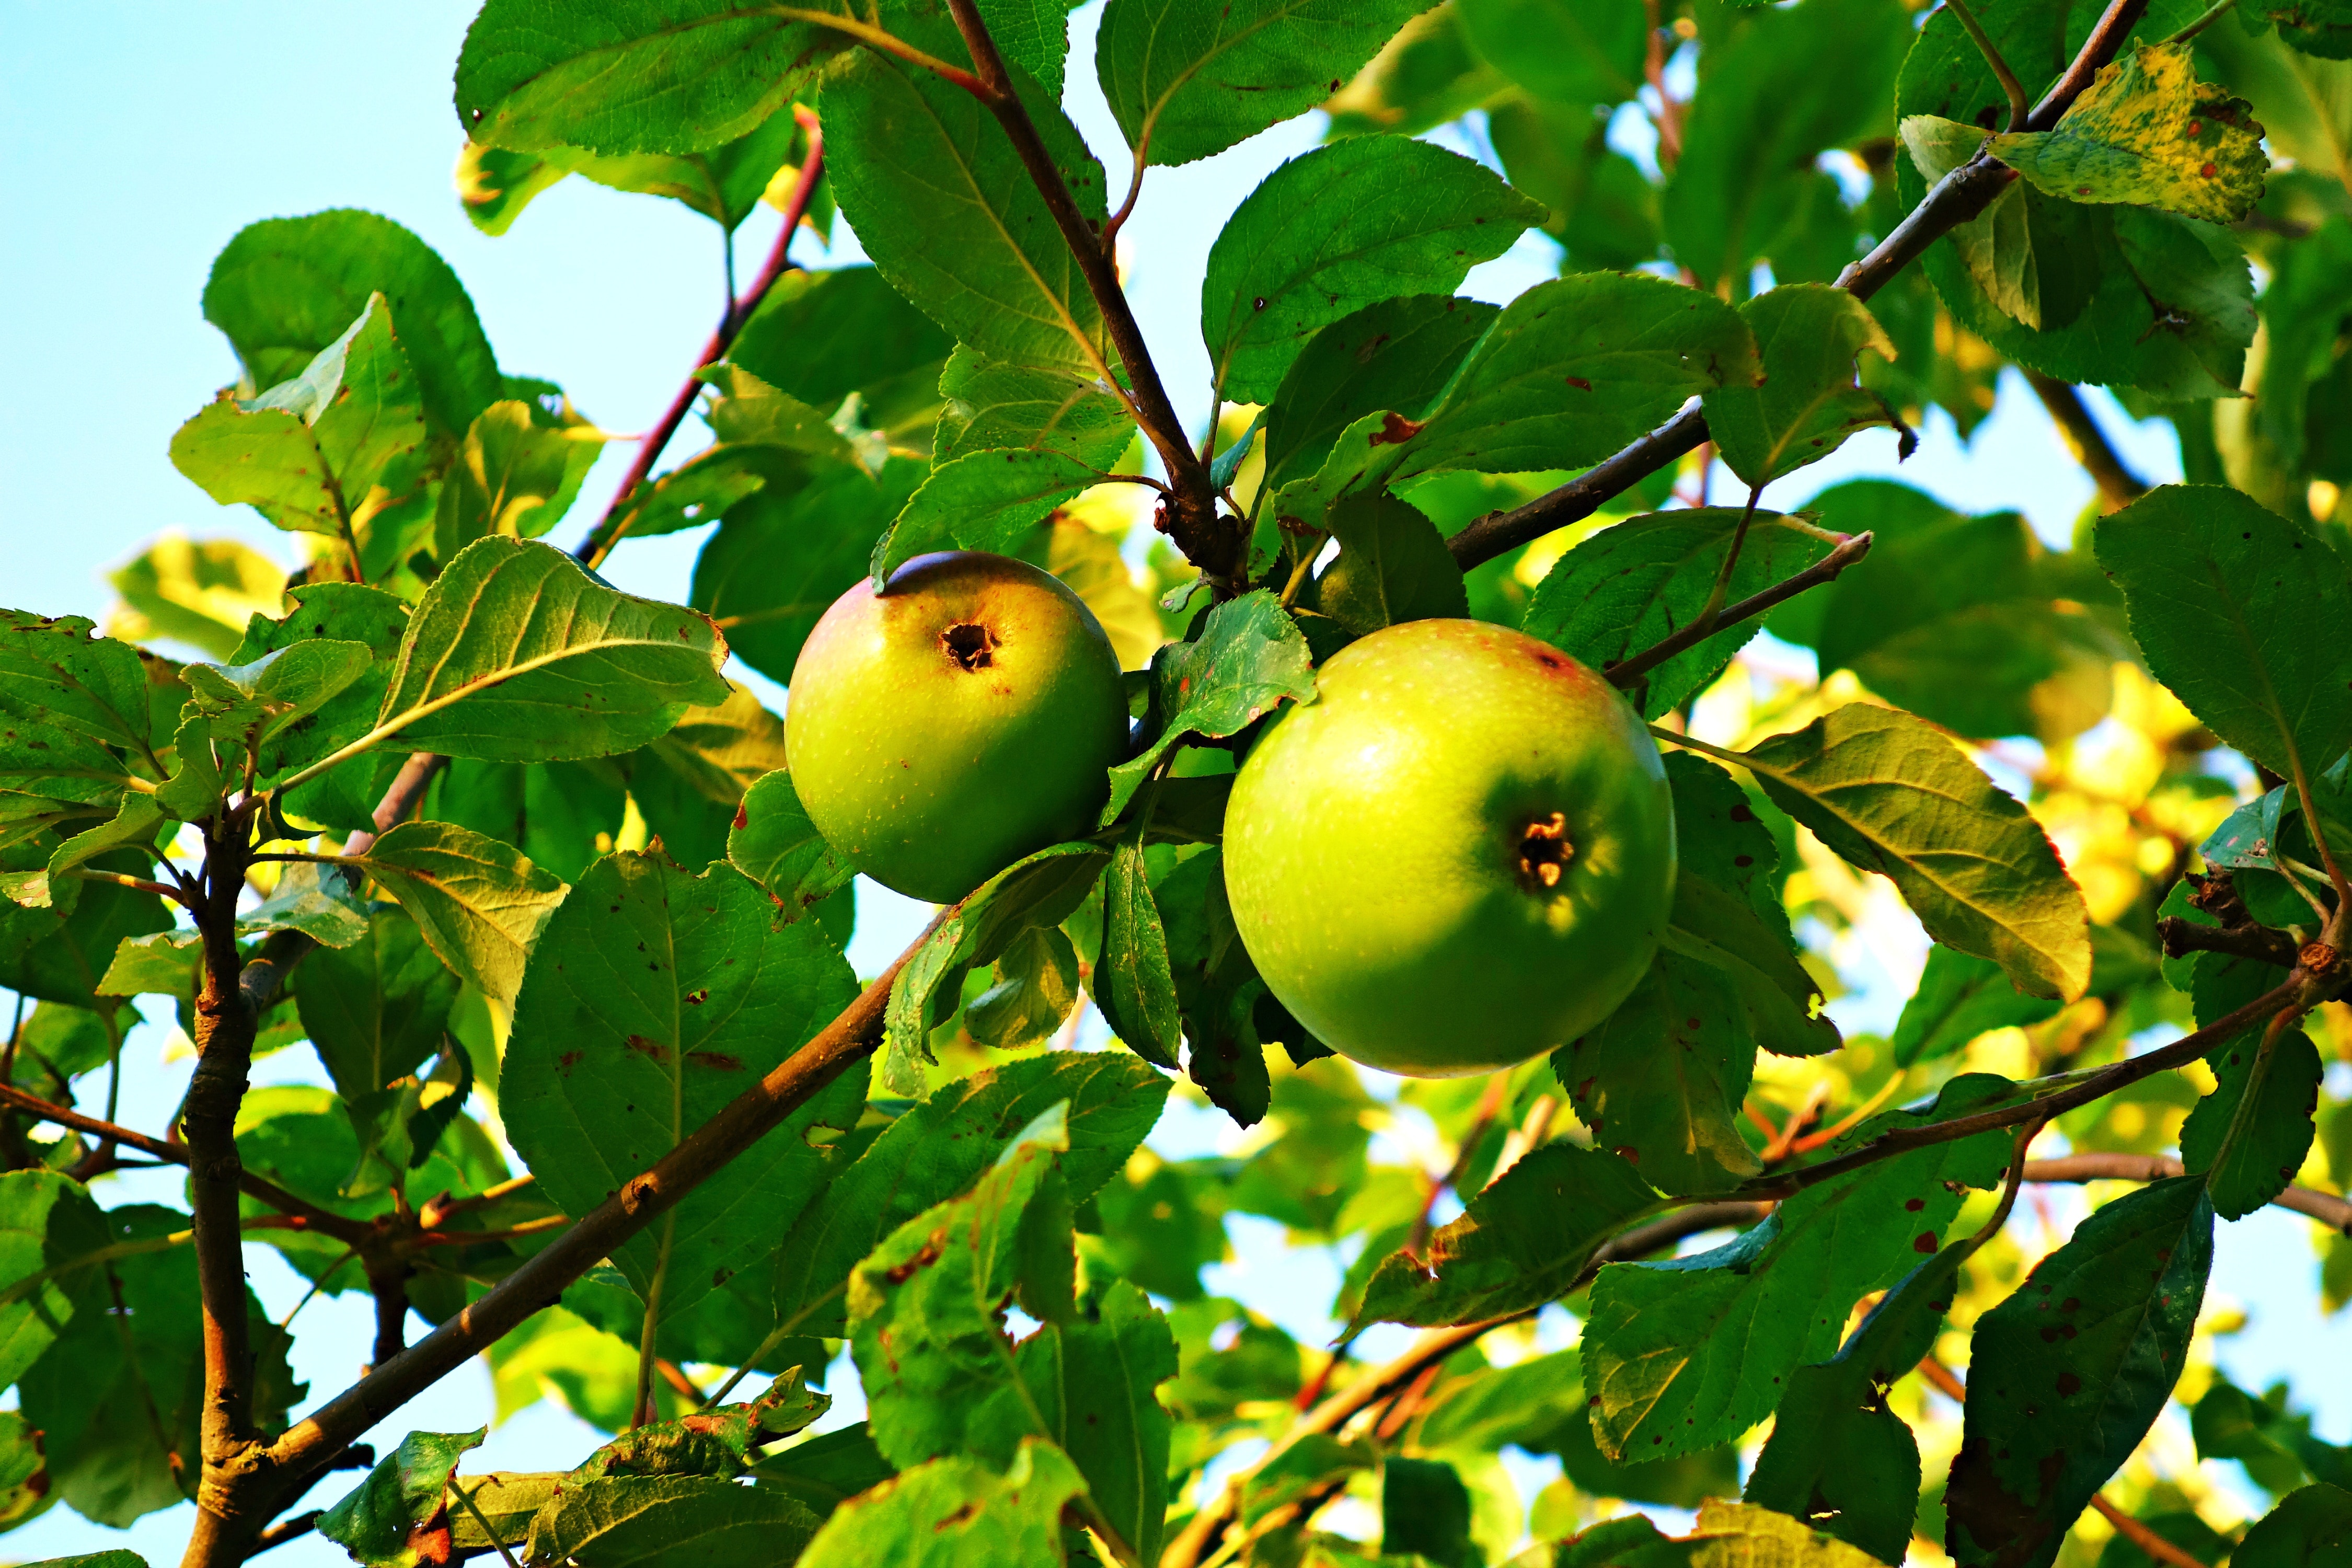 green apple on green leafed tree